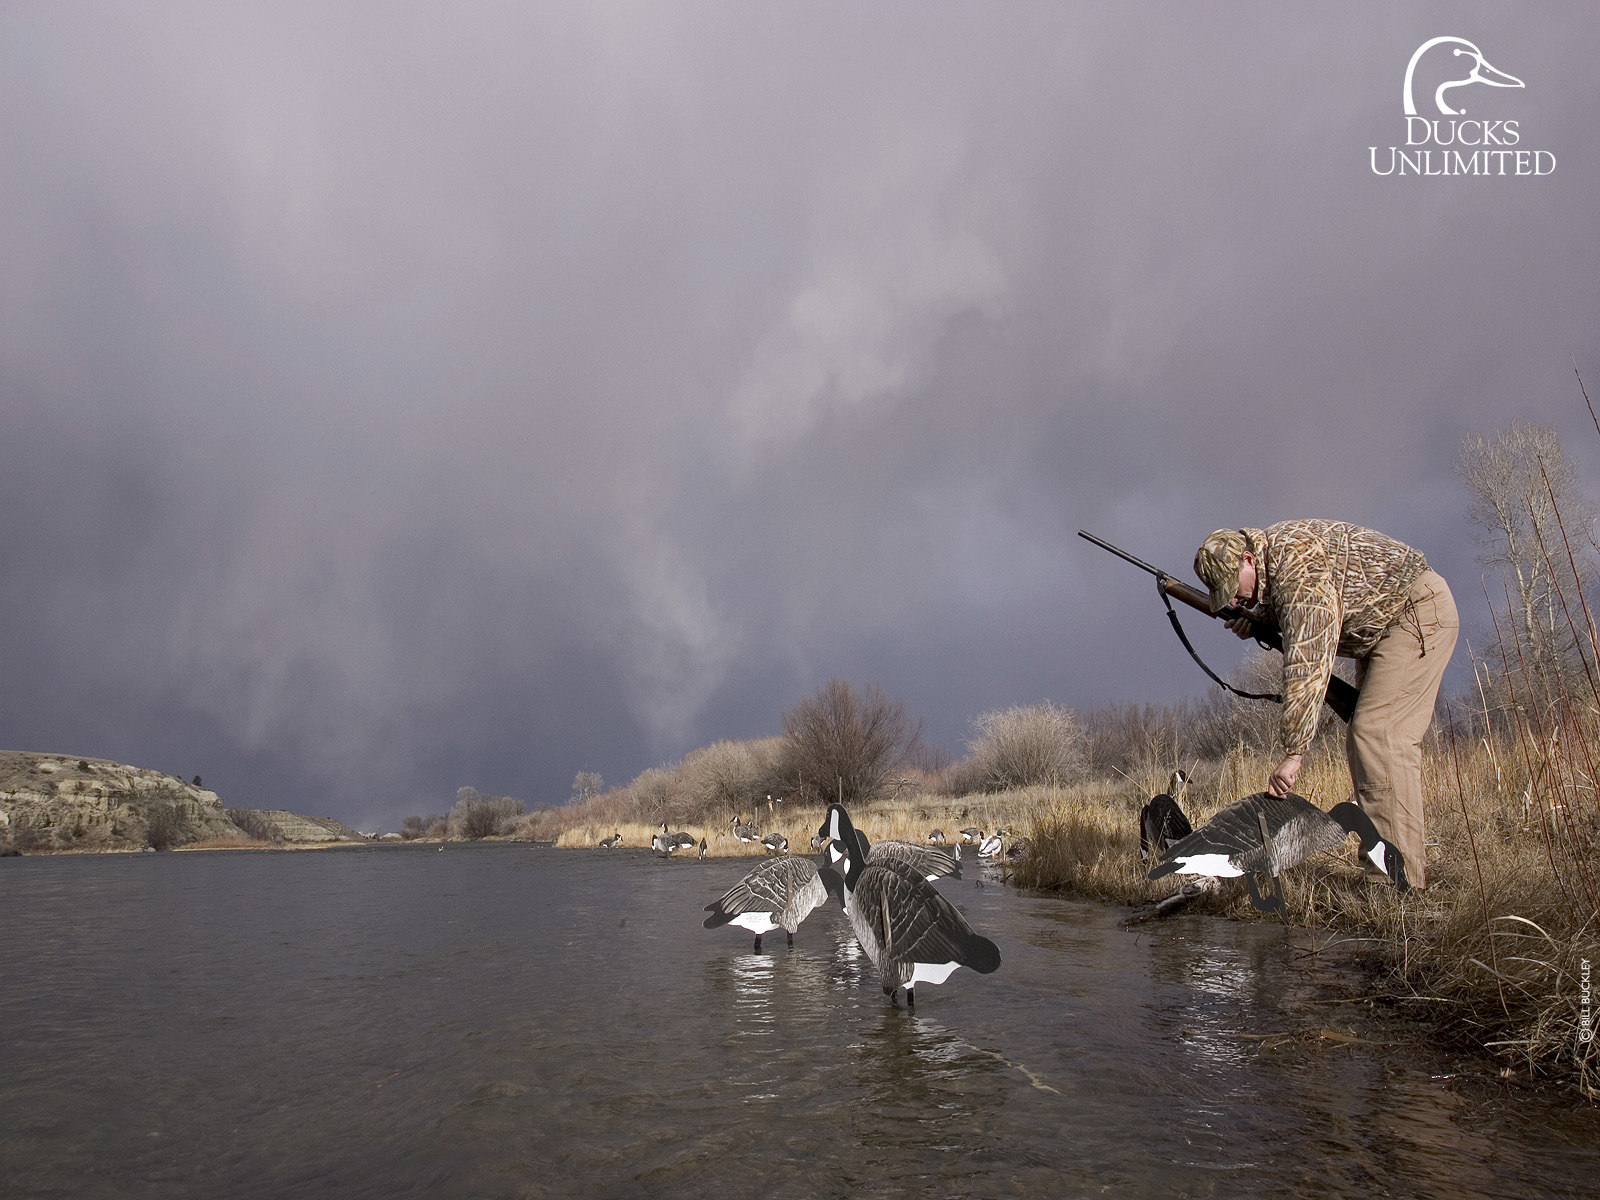 ducks unlimited wallpaper,atmospheric phenomenon,wildlife,bank,fly fishing,river